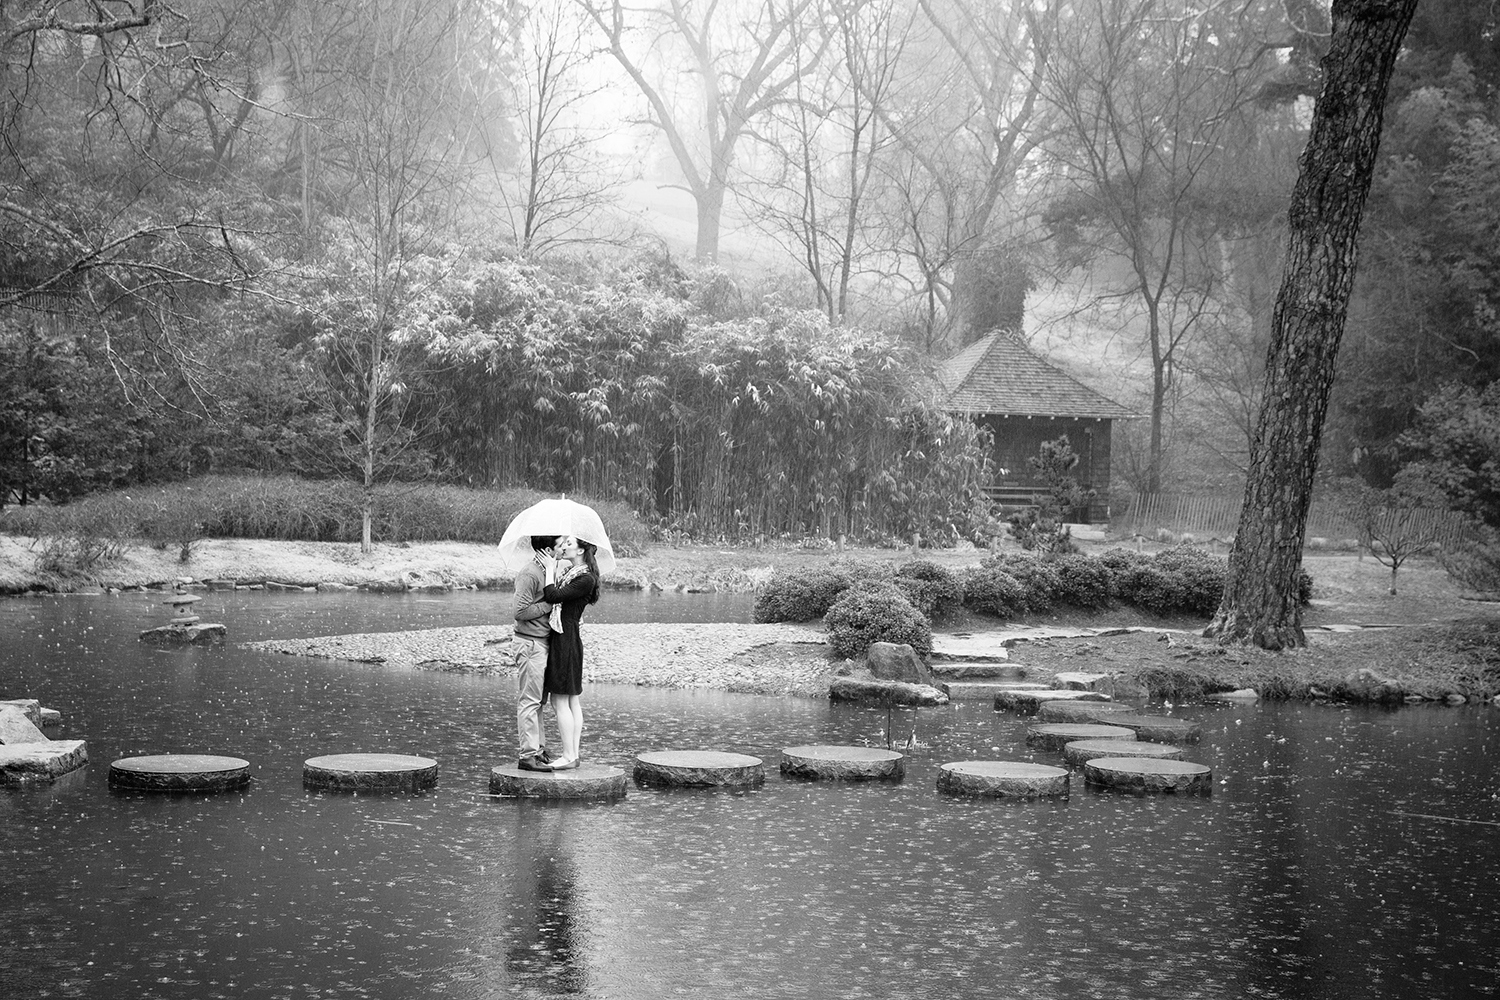 Kristen  Kens Maymont Rainy Day Engagement Shoot - Image Property of www.j-dphoto.com